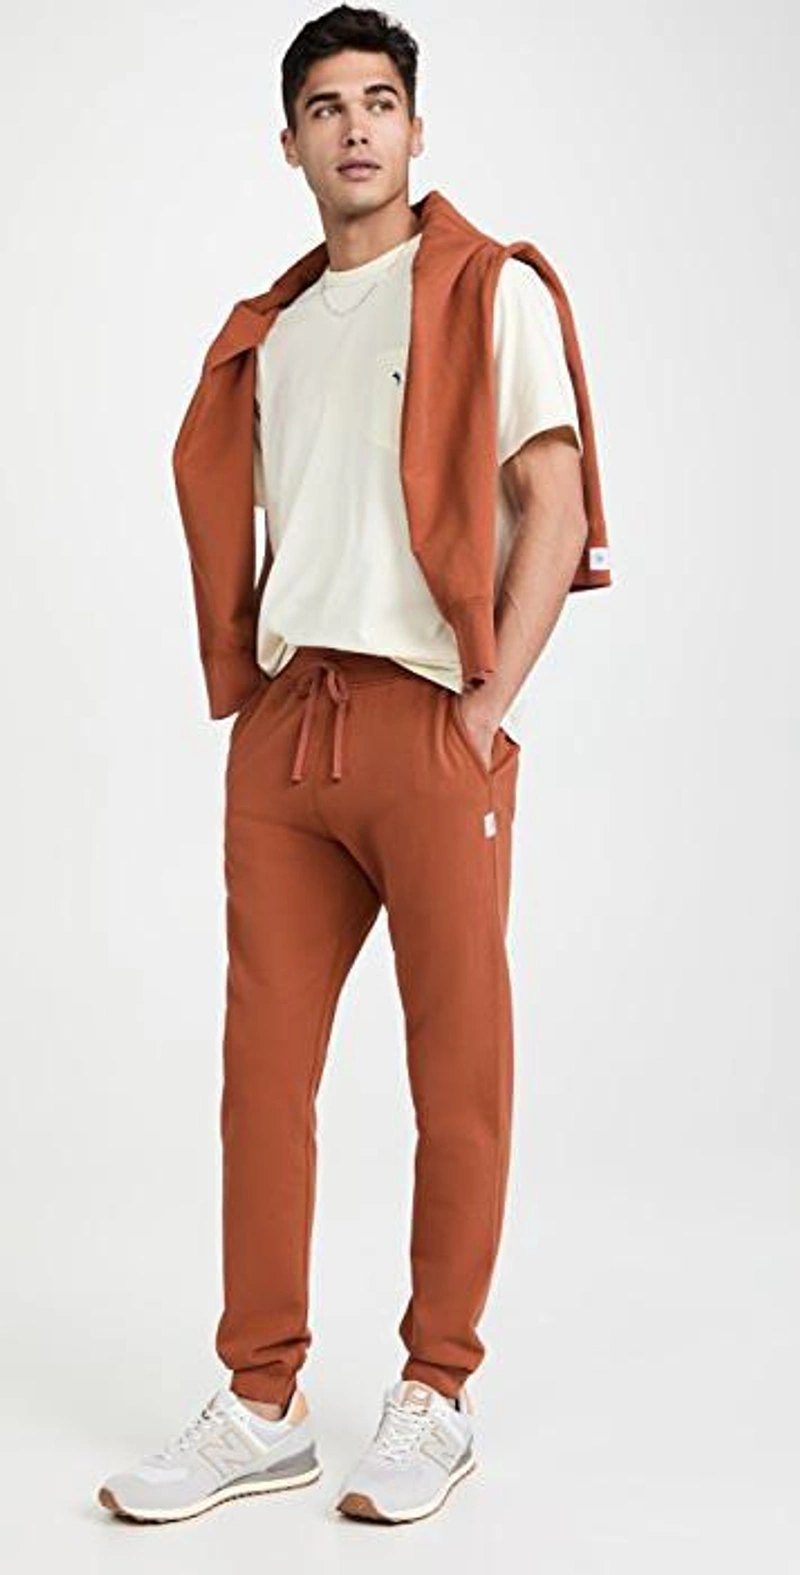 shopbop.com's Posts | Wearing: Reigning Champ Slim Fit Sweatpants In Sierra; Maison Kitsuné Tricolor Fox Patch Classic Pocket T-shirt In Ecru; Reigning Champ Crew Neck Sweatshirt